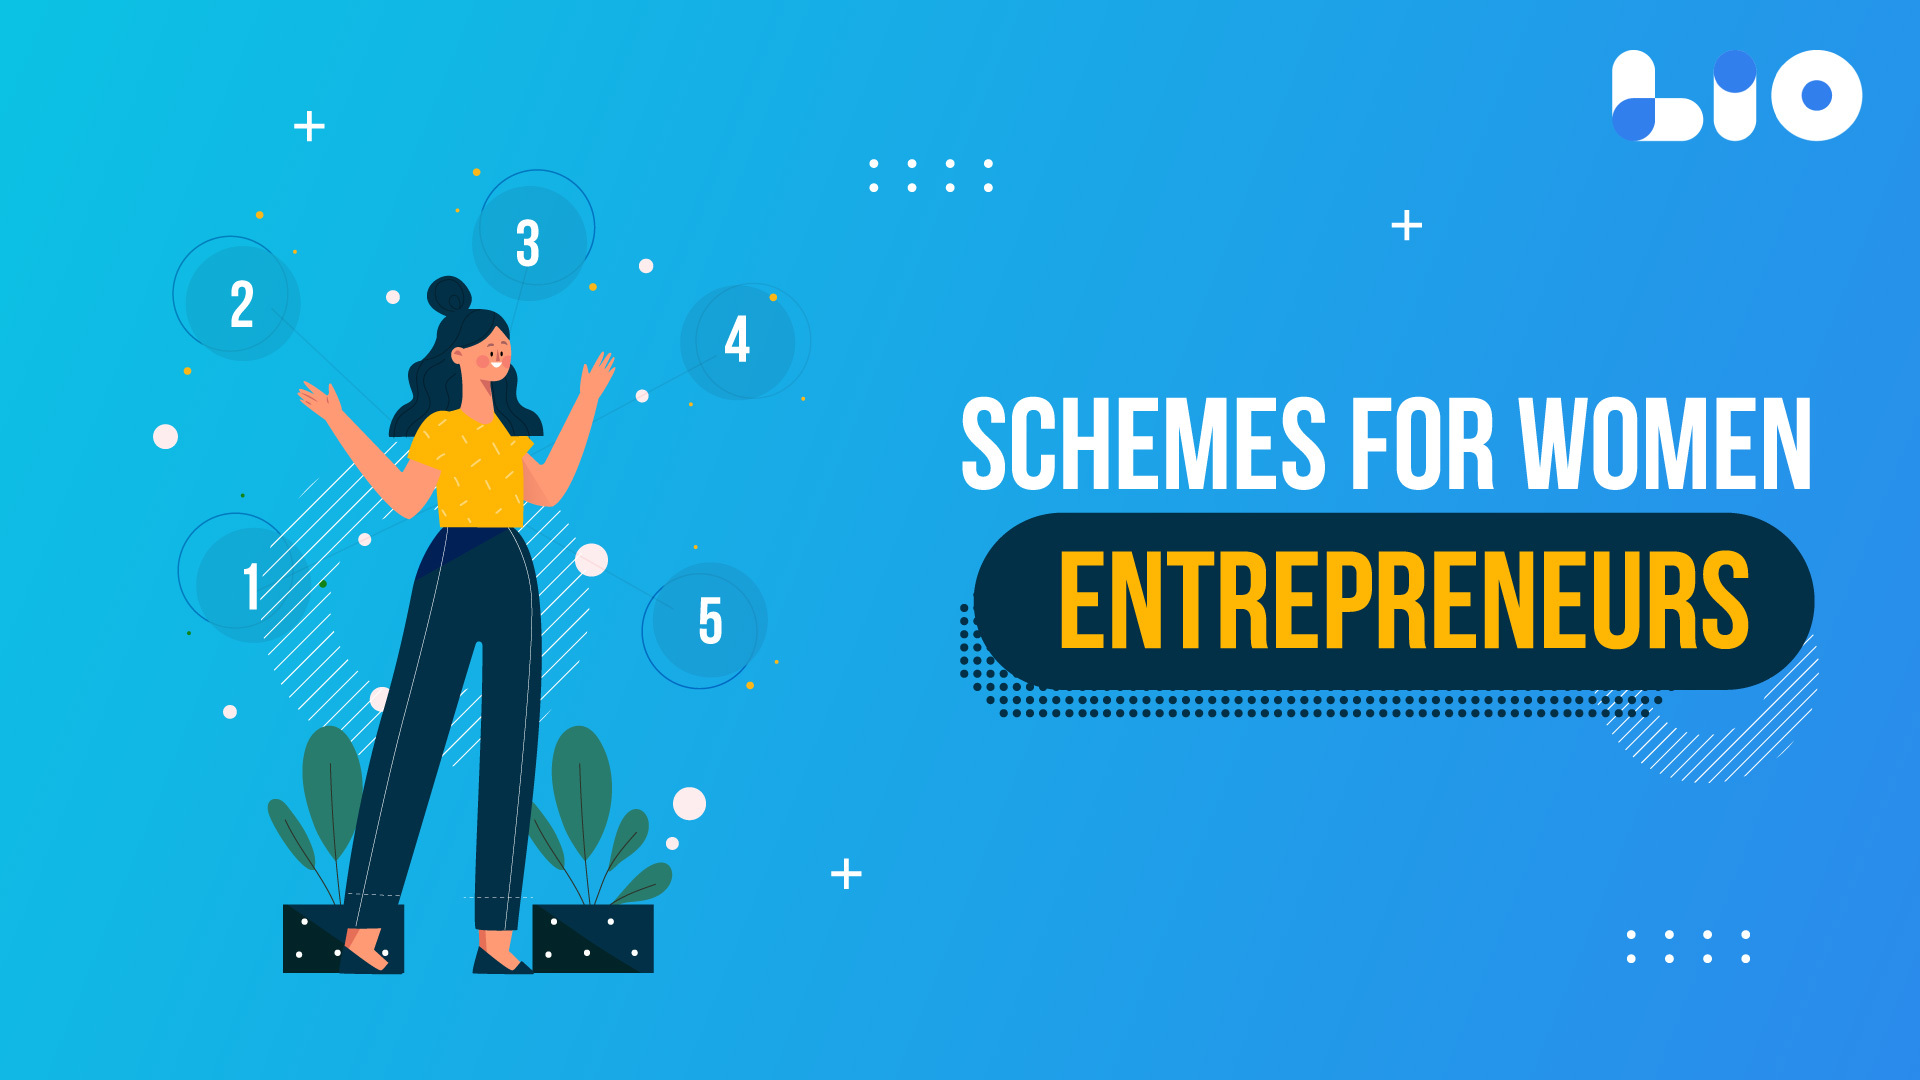 Schemes for Women Entrepreneurs to Kickstart Their Business